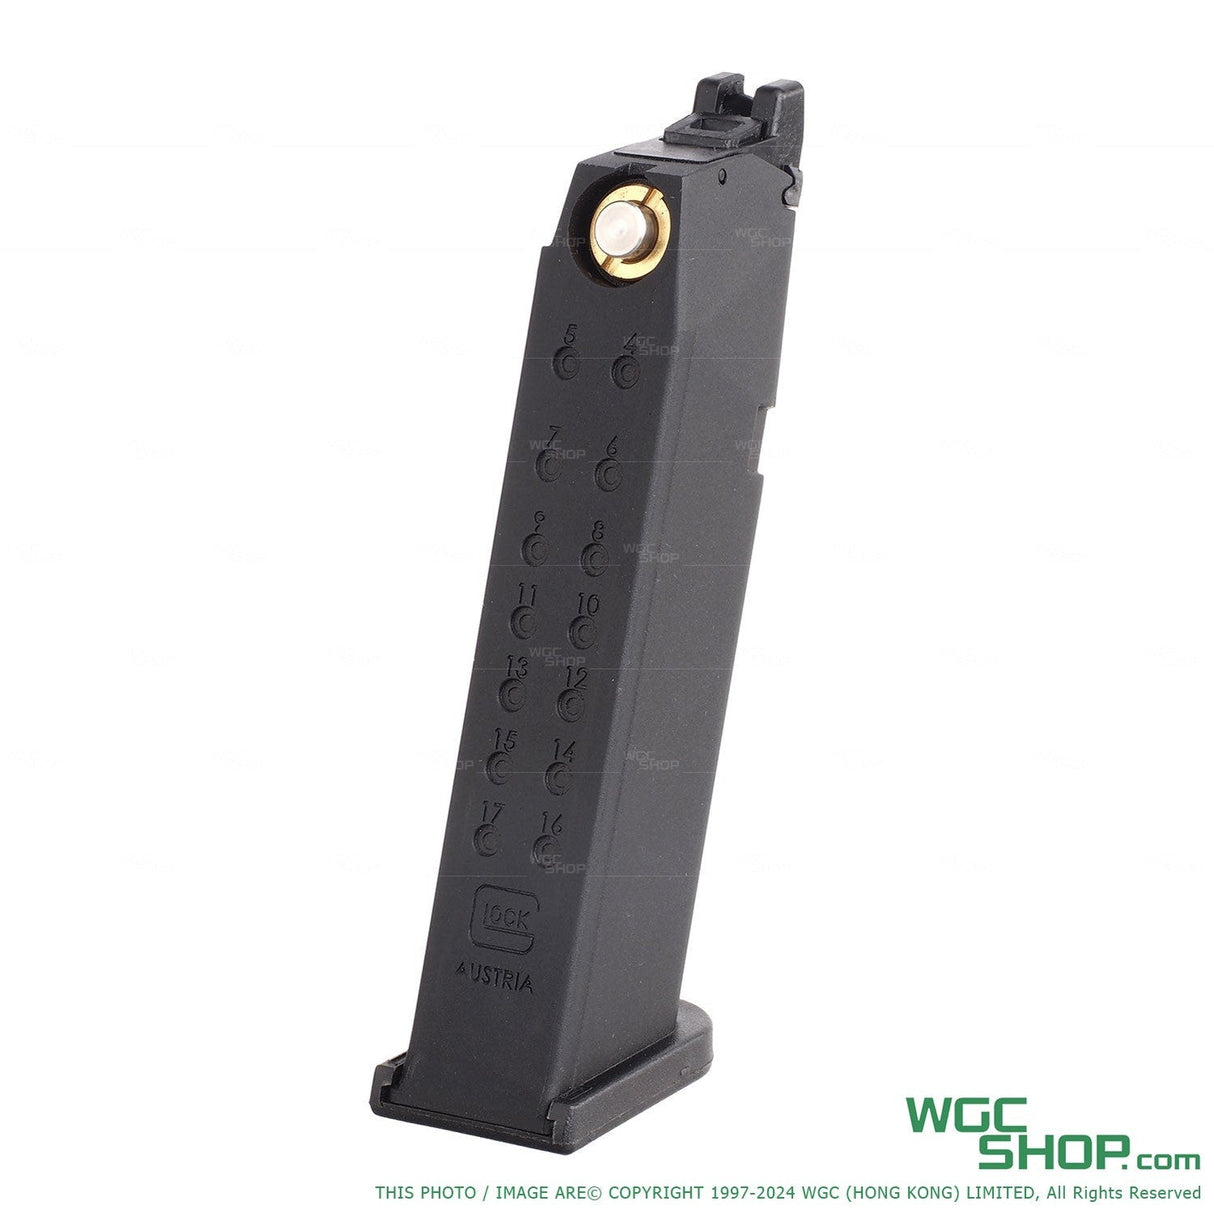 UMAREX / GHK Glock G17 Gen5 MOS GBB Airsoft ( With Reflex Sight Adapter Set )